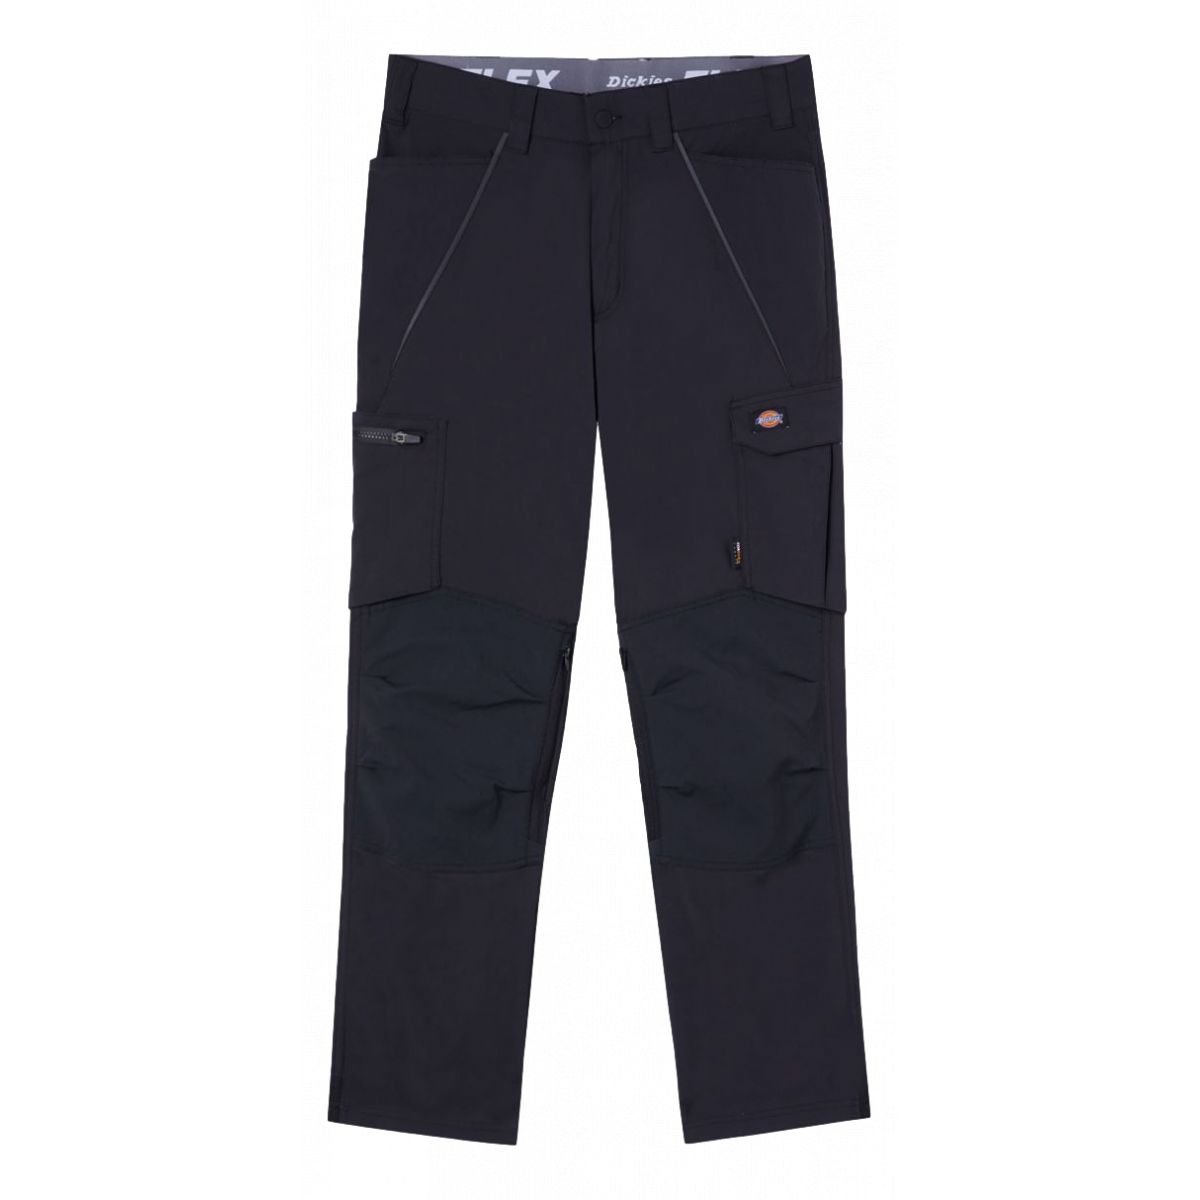 Pantalon léger Flex Noir - Dickies - Taille 54 0